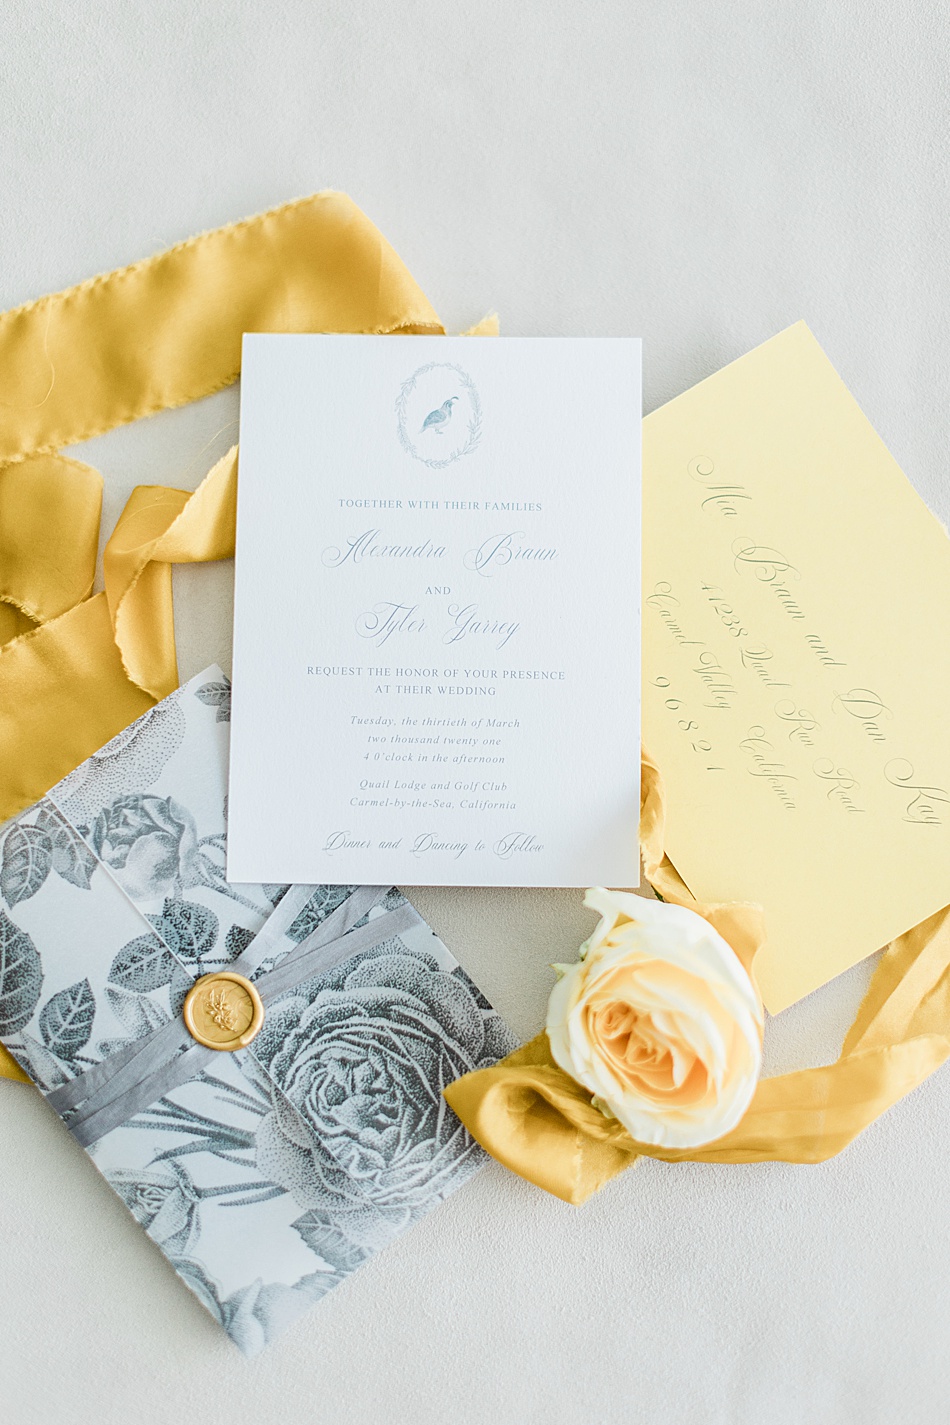 wedding invitation inspiration